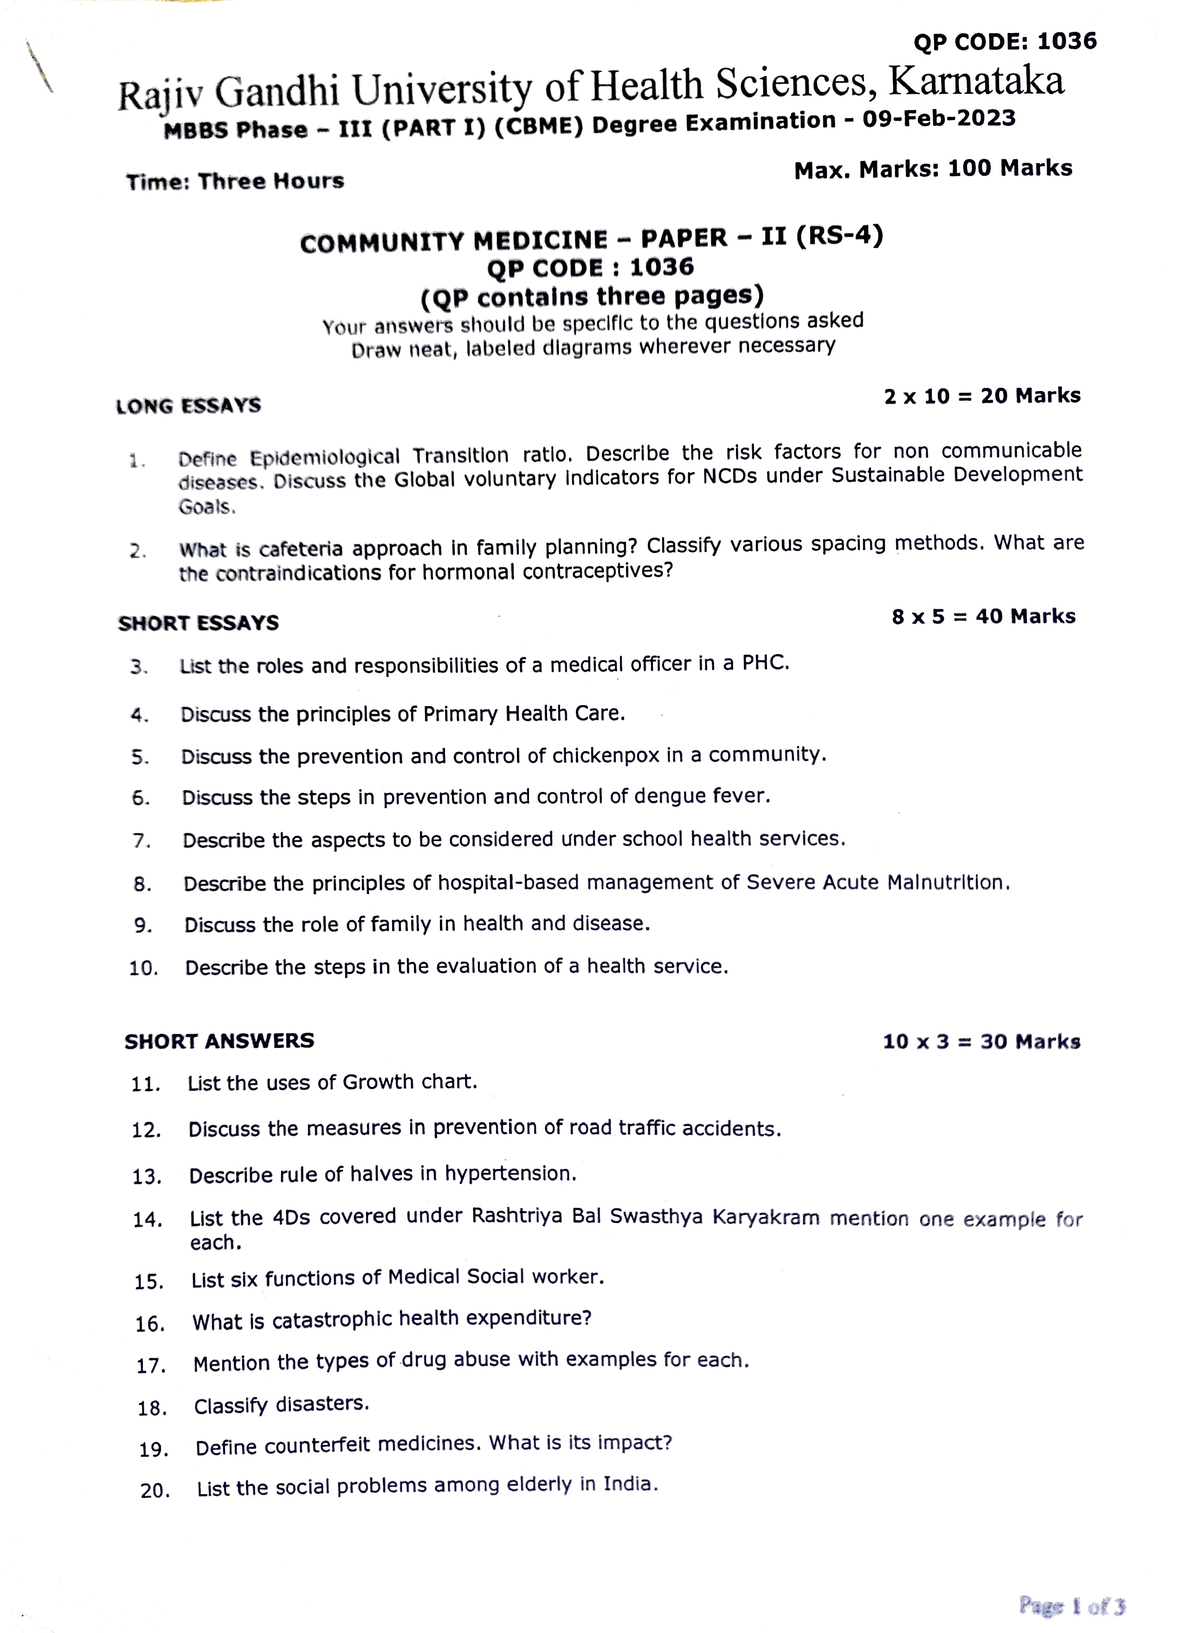 thesis on community medicine